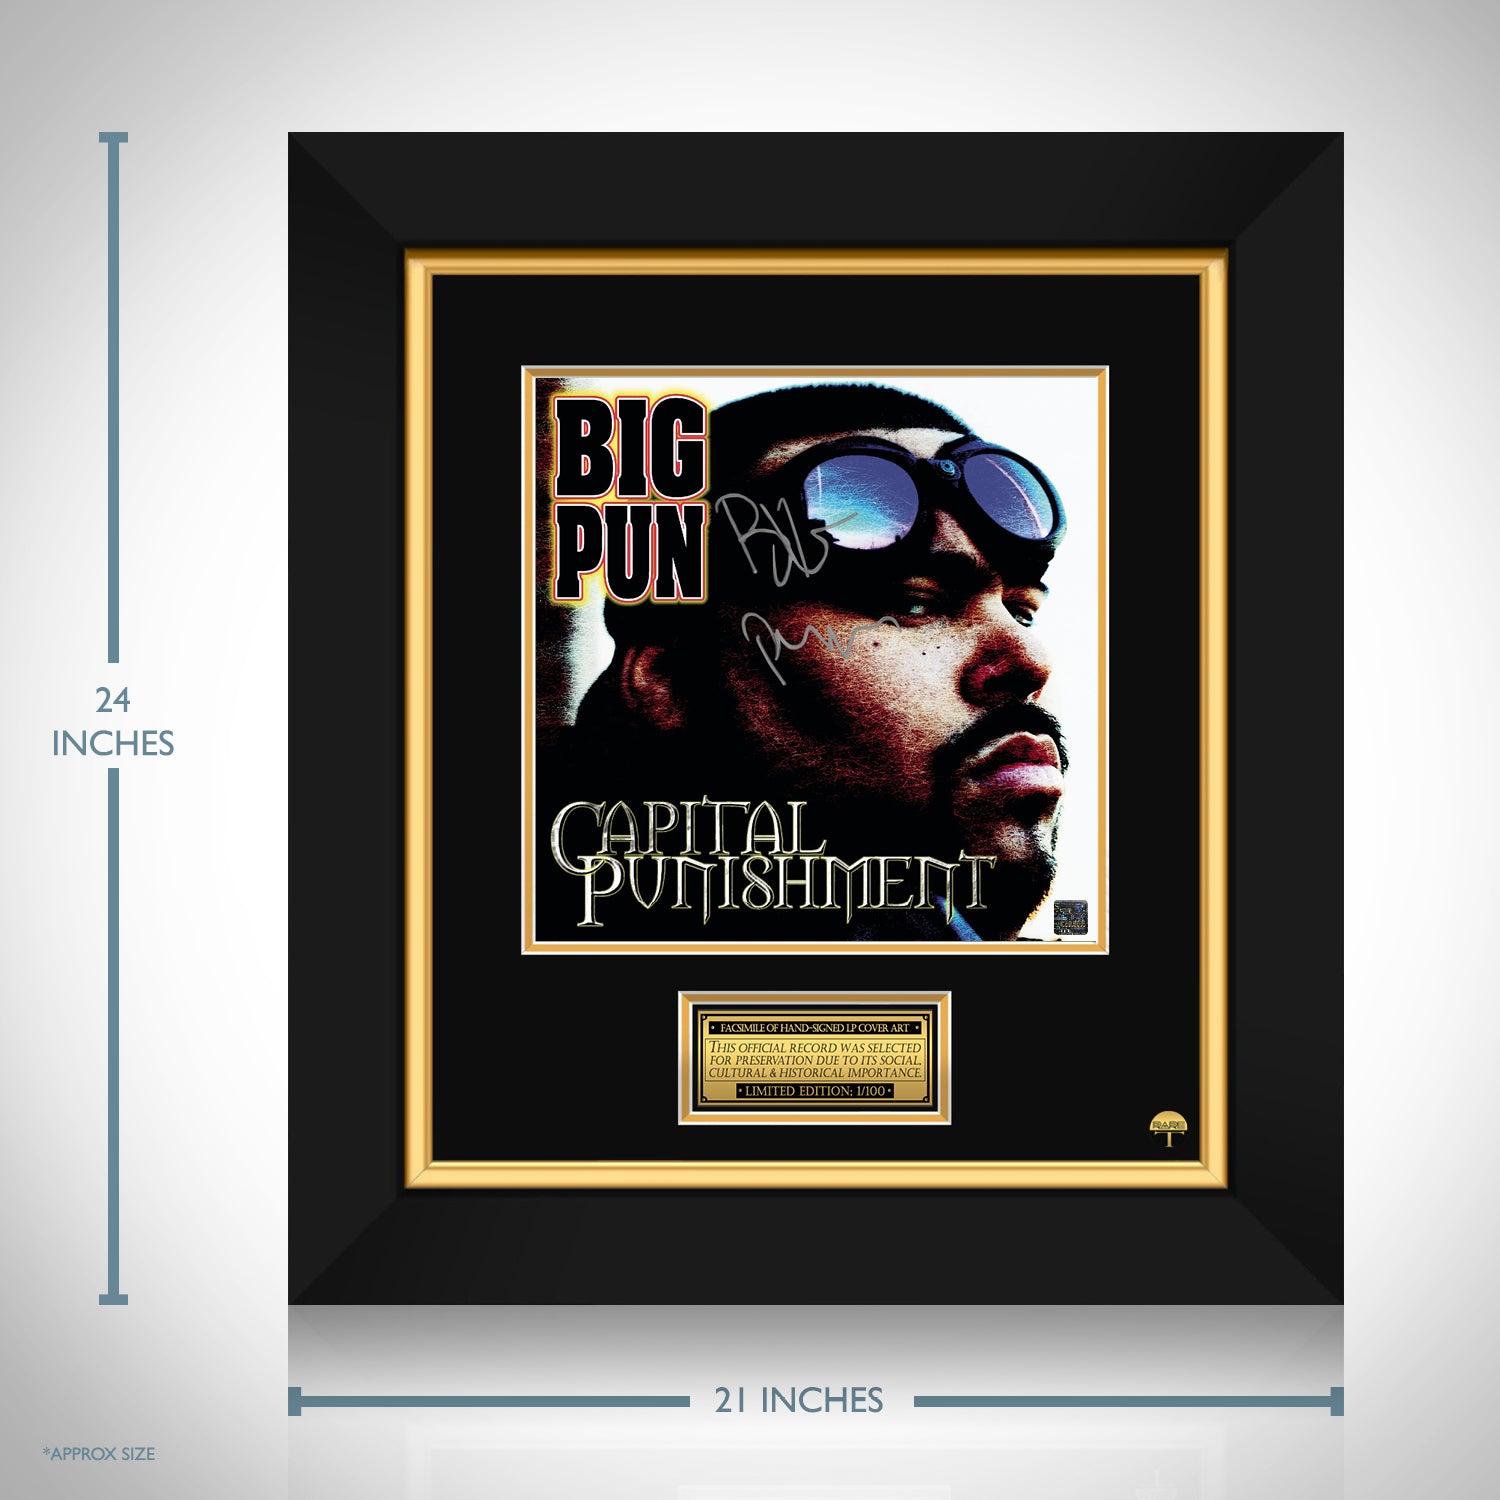 Big Pun - Capital Punishment LP Cover Limited Signature Edition